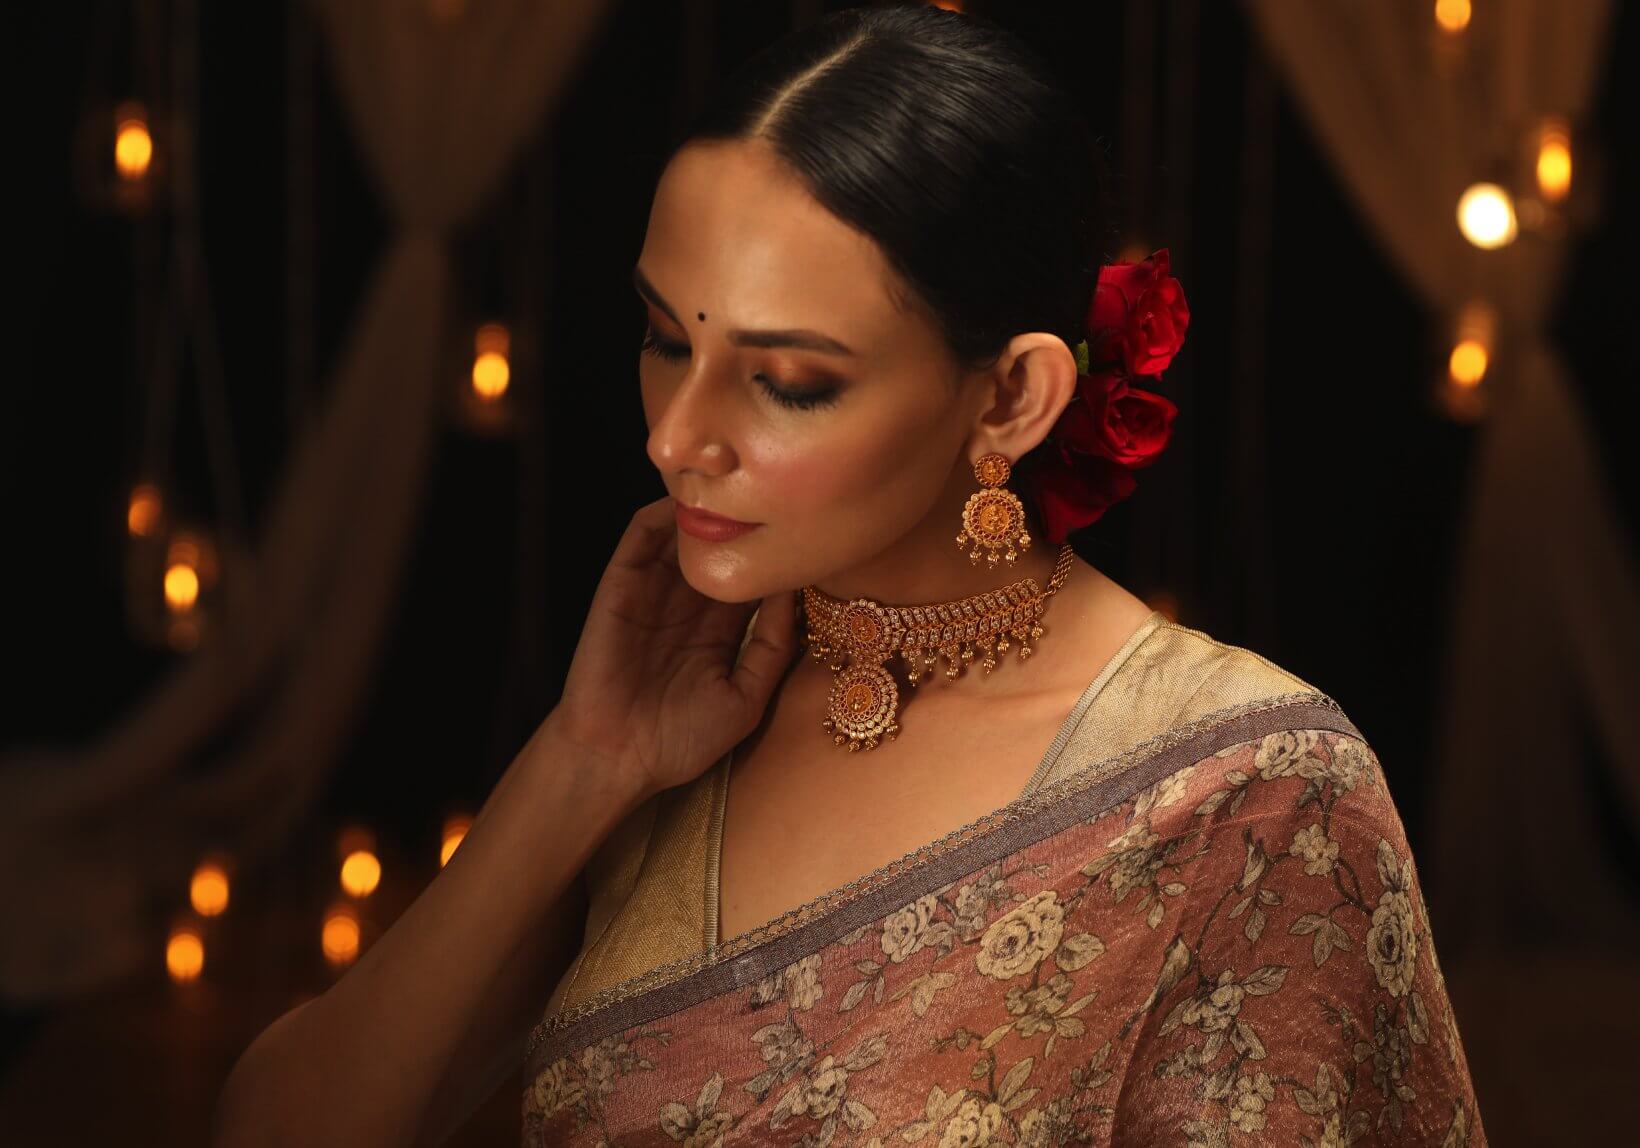 Top Trendy Ways To Wear Indian Jewelry